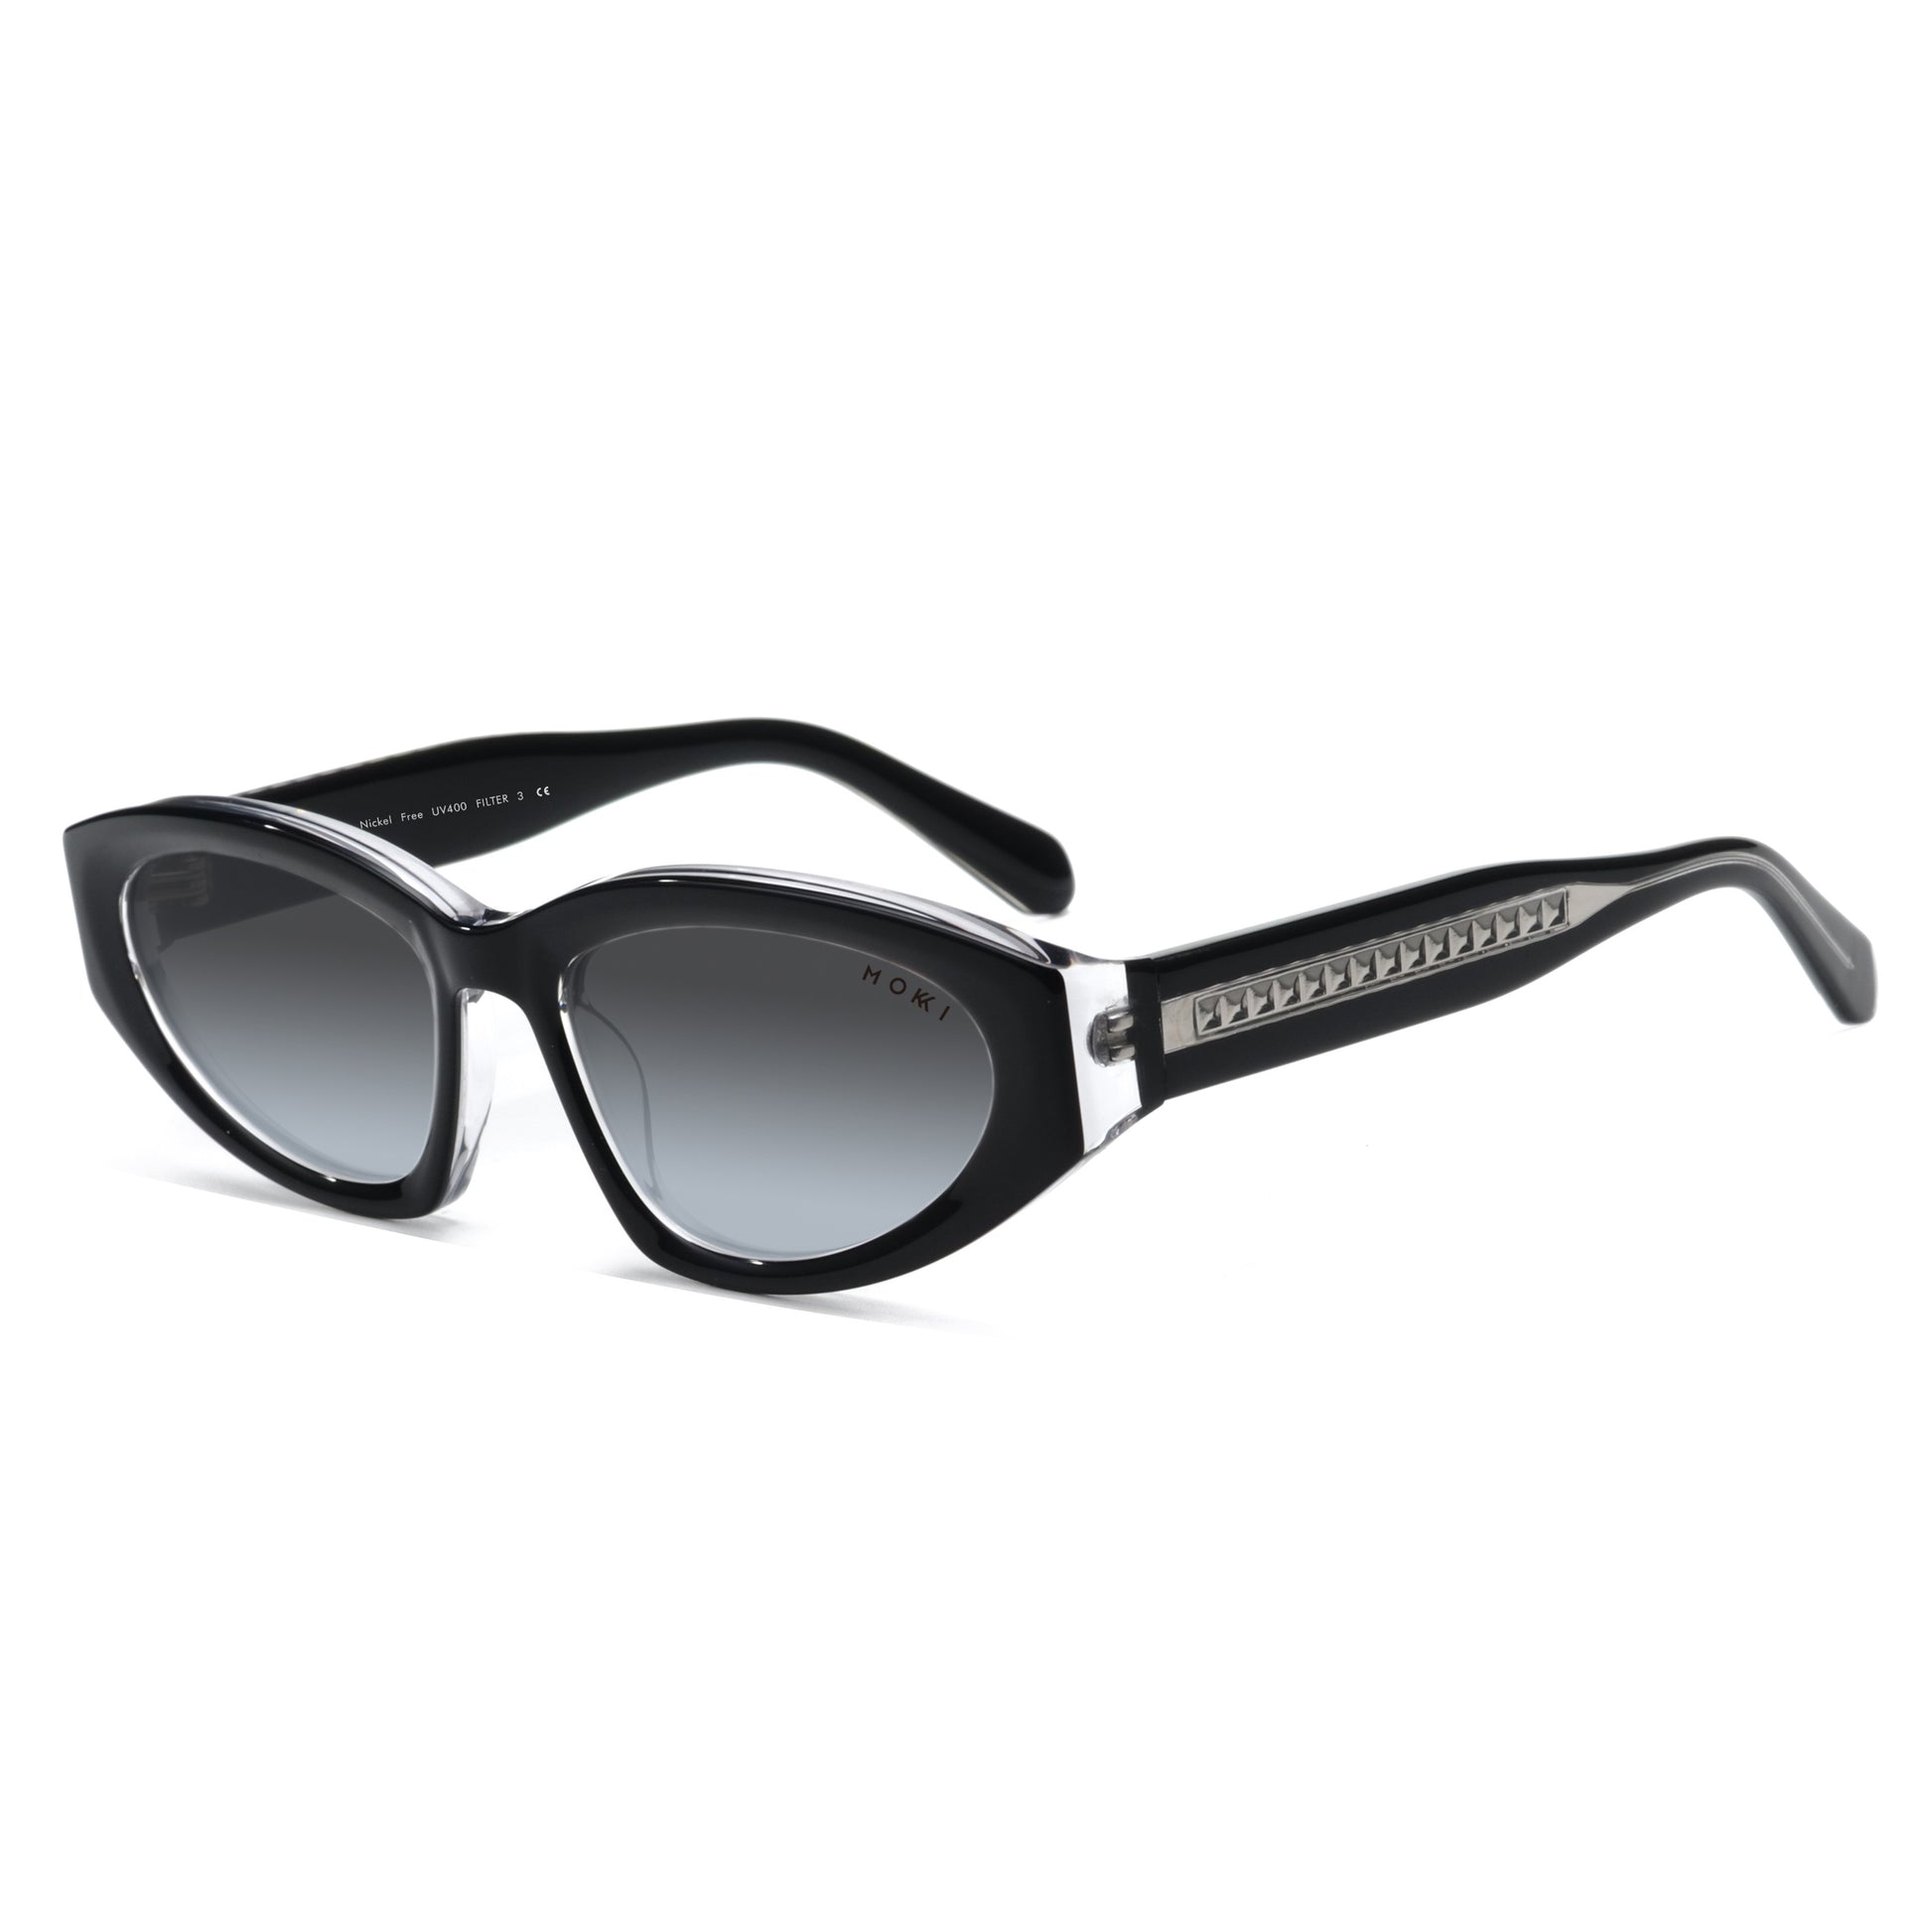 Mokki Streamlined Slim Sunglasses in transparent black